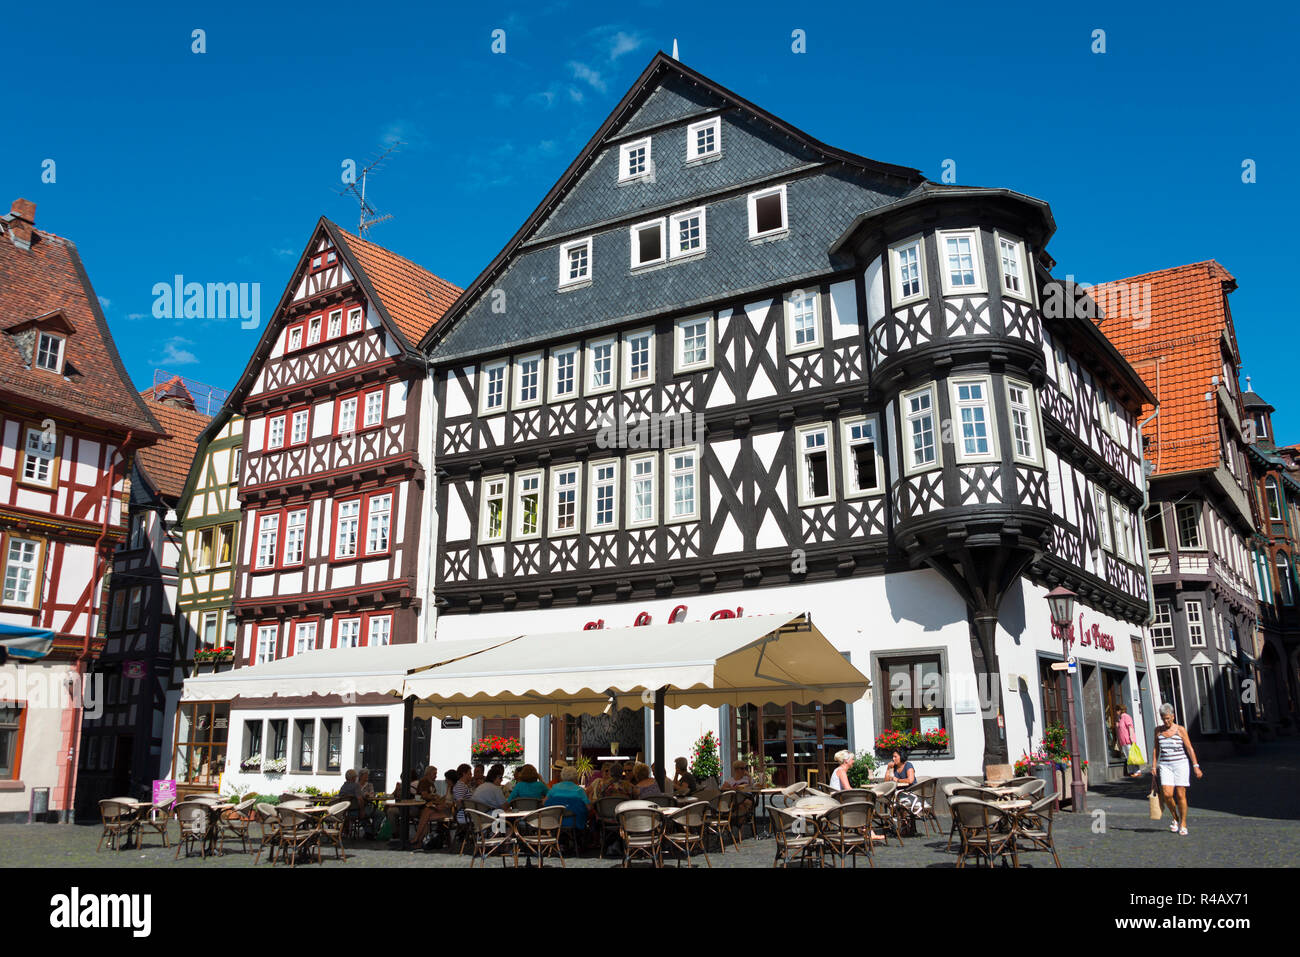 Bucking house, market place, old town, Alsfeld, Hesse, Germany, Bückinghaus Stock Photo